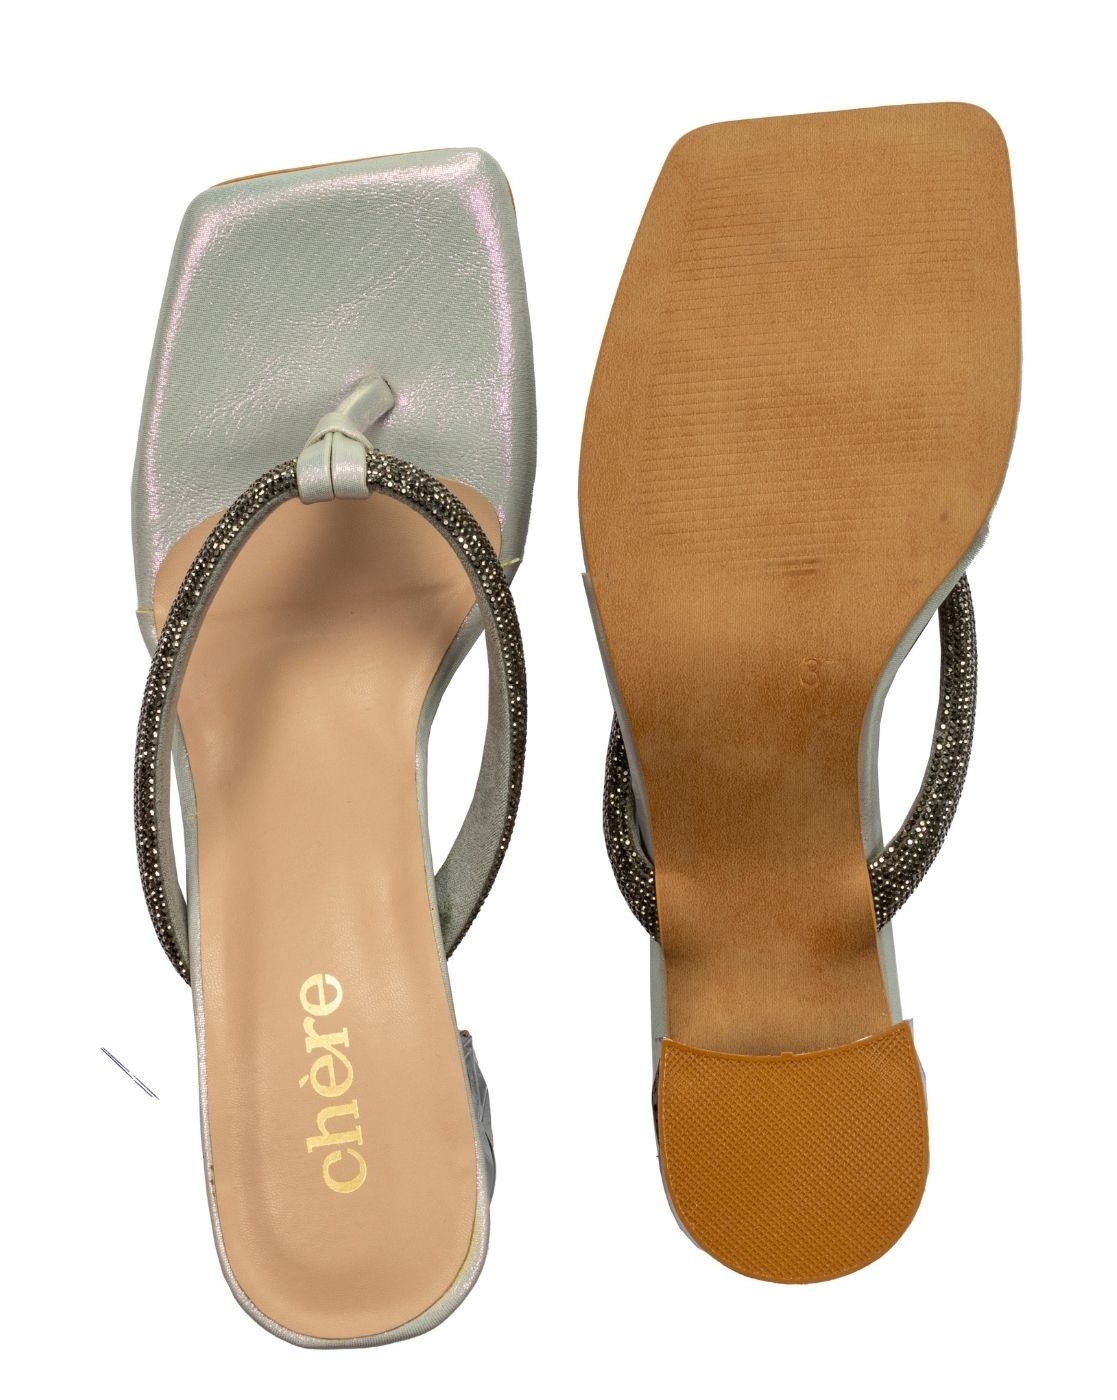 Chere | CHERE Premium Embellished Block heel with unique Mirror Effect, 3